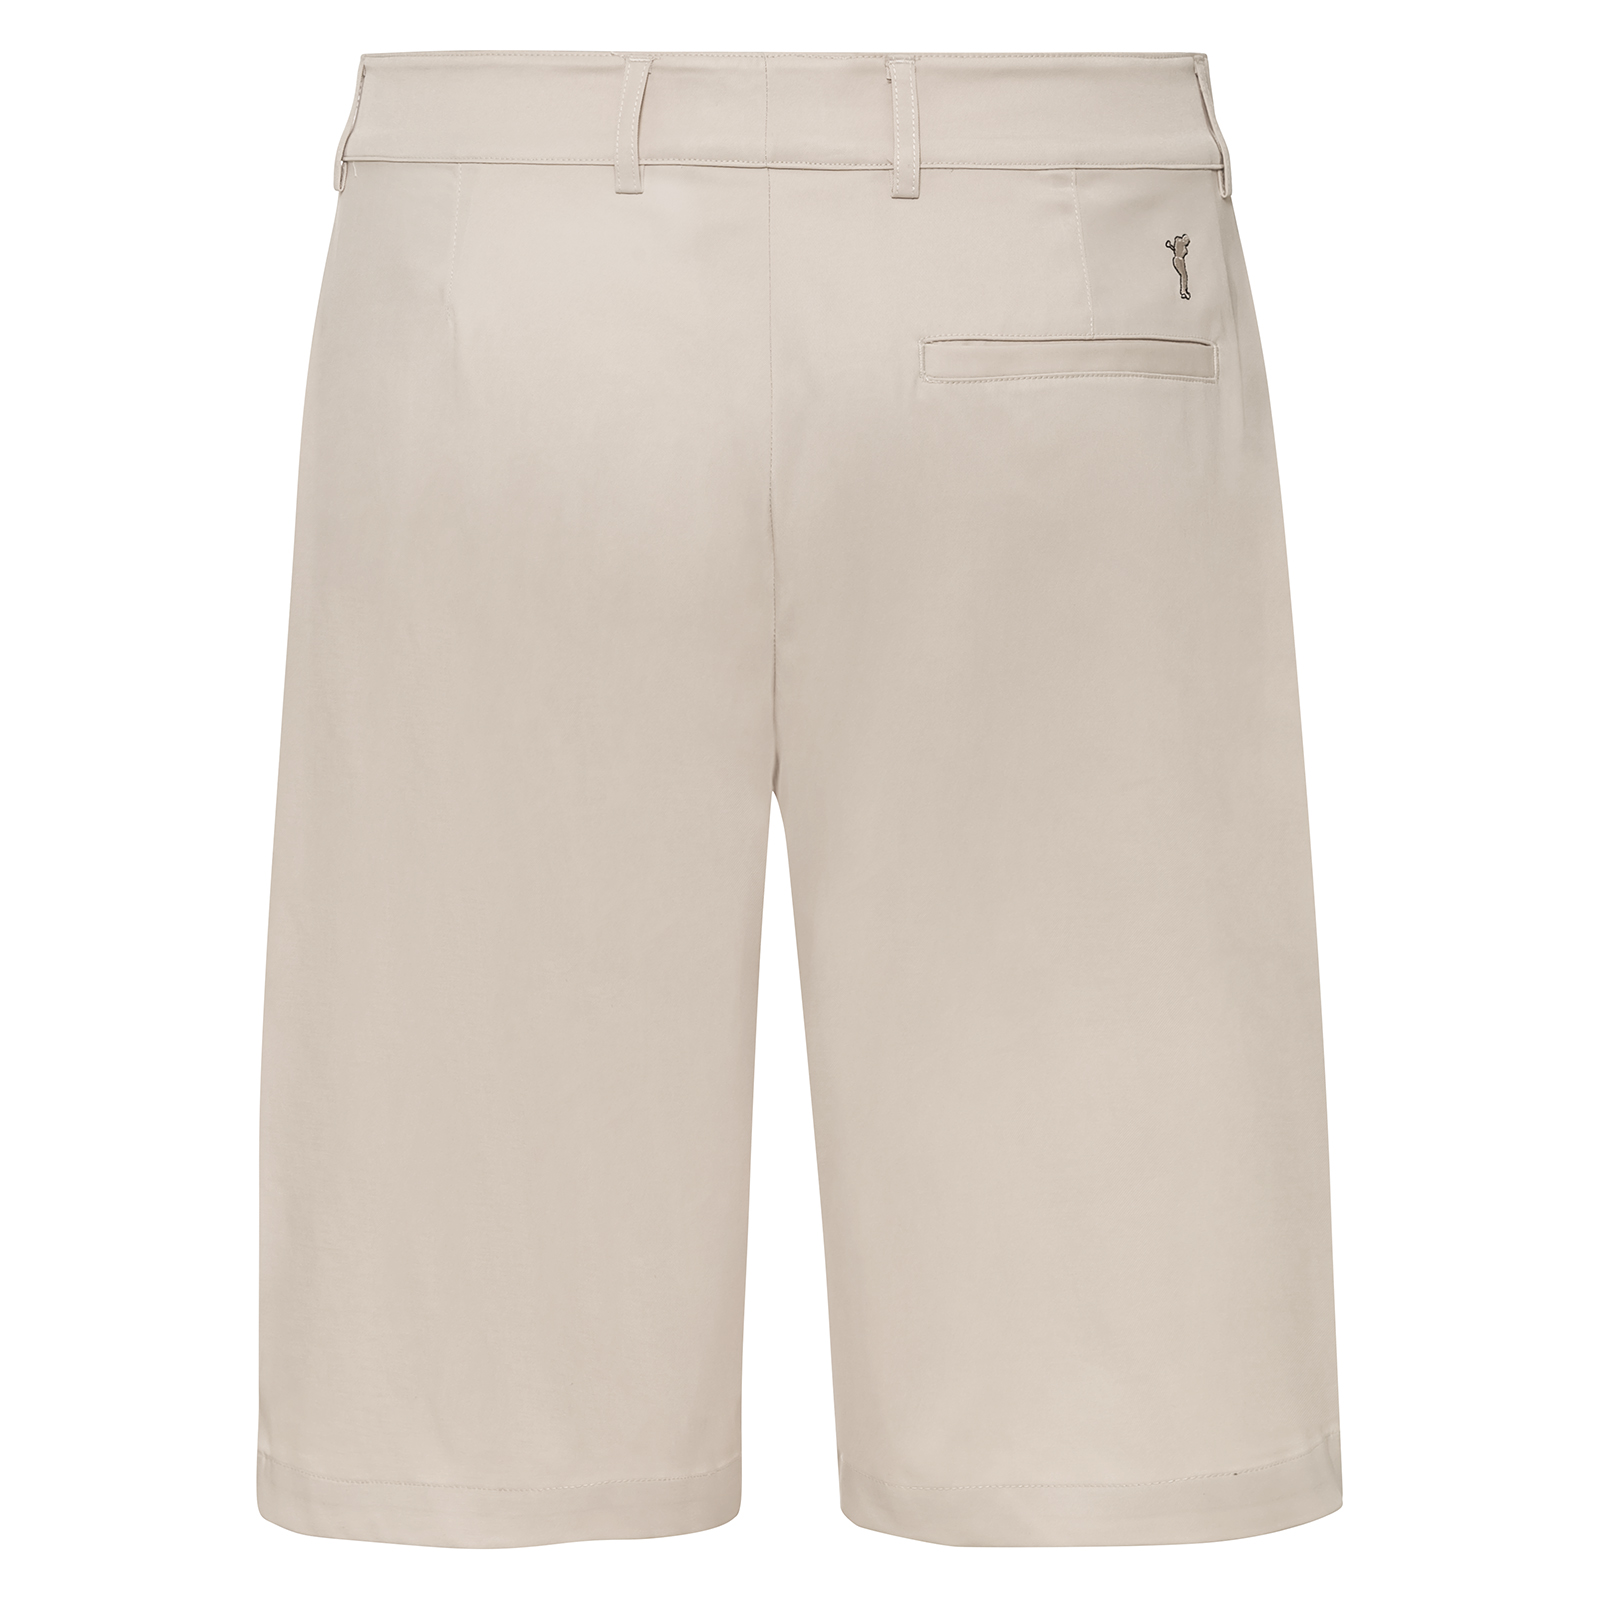 Men's quick dry golf Bermuda shorts